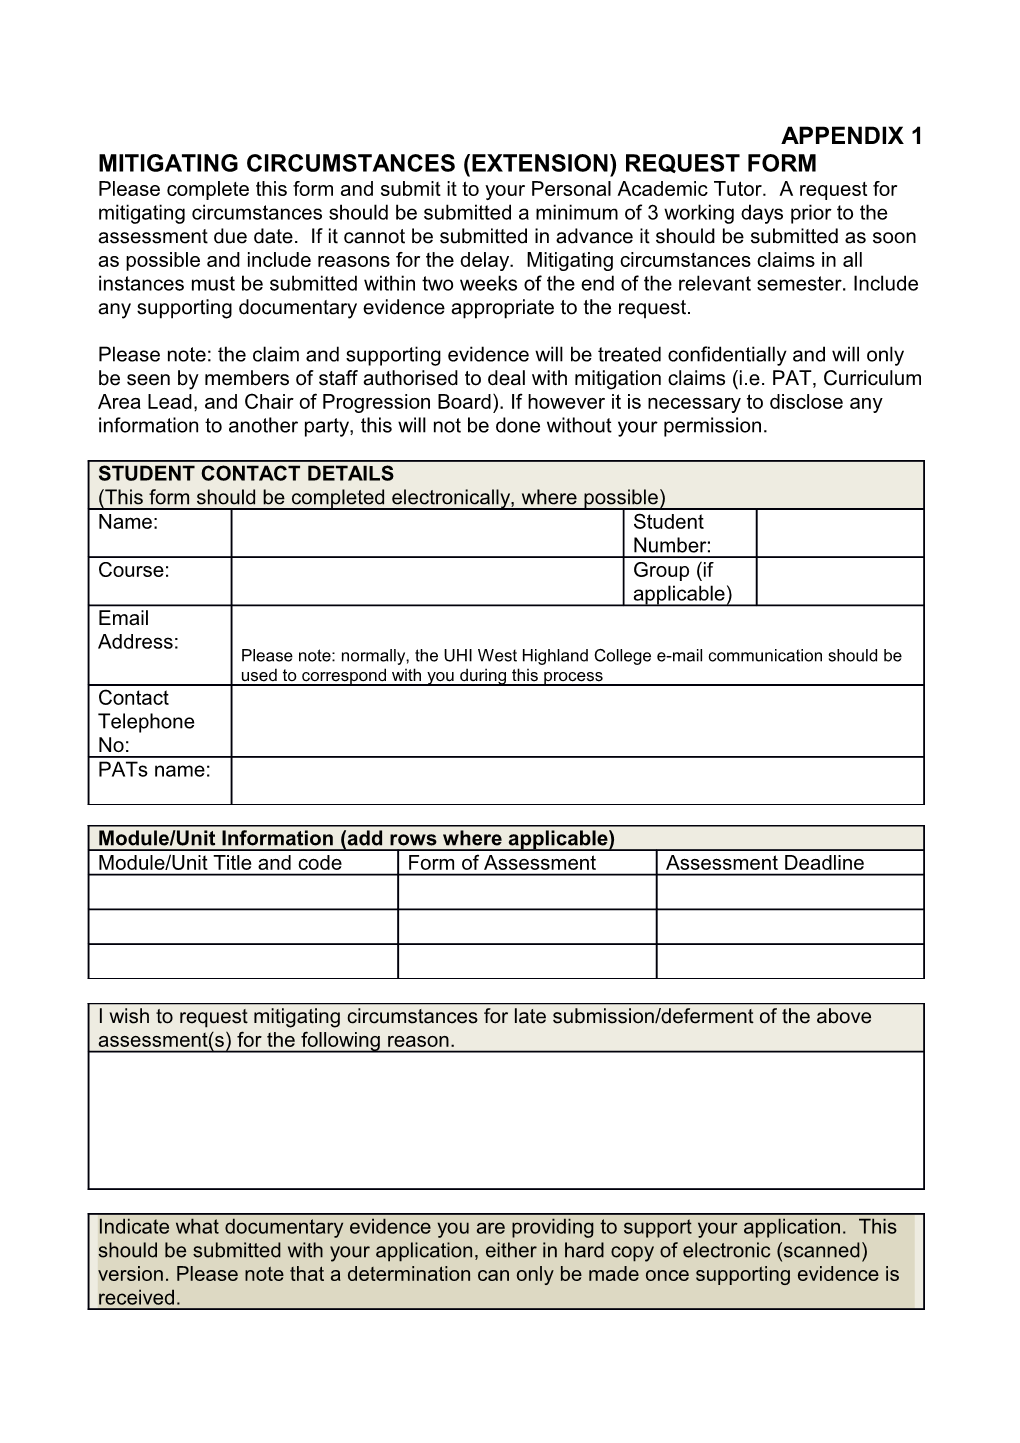 Mitigating Circumstances (Extension) Request Form